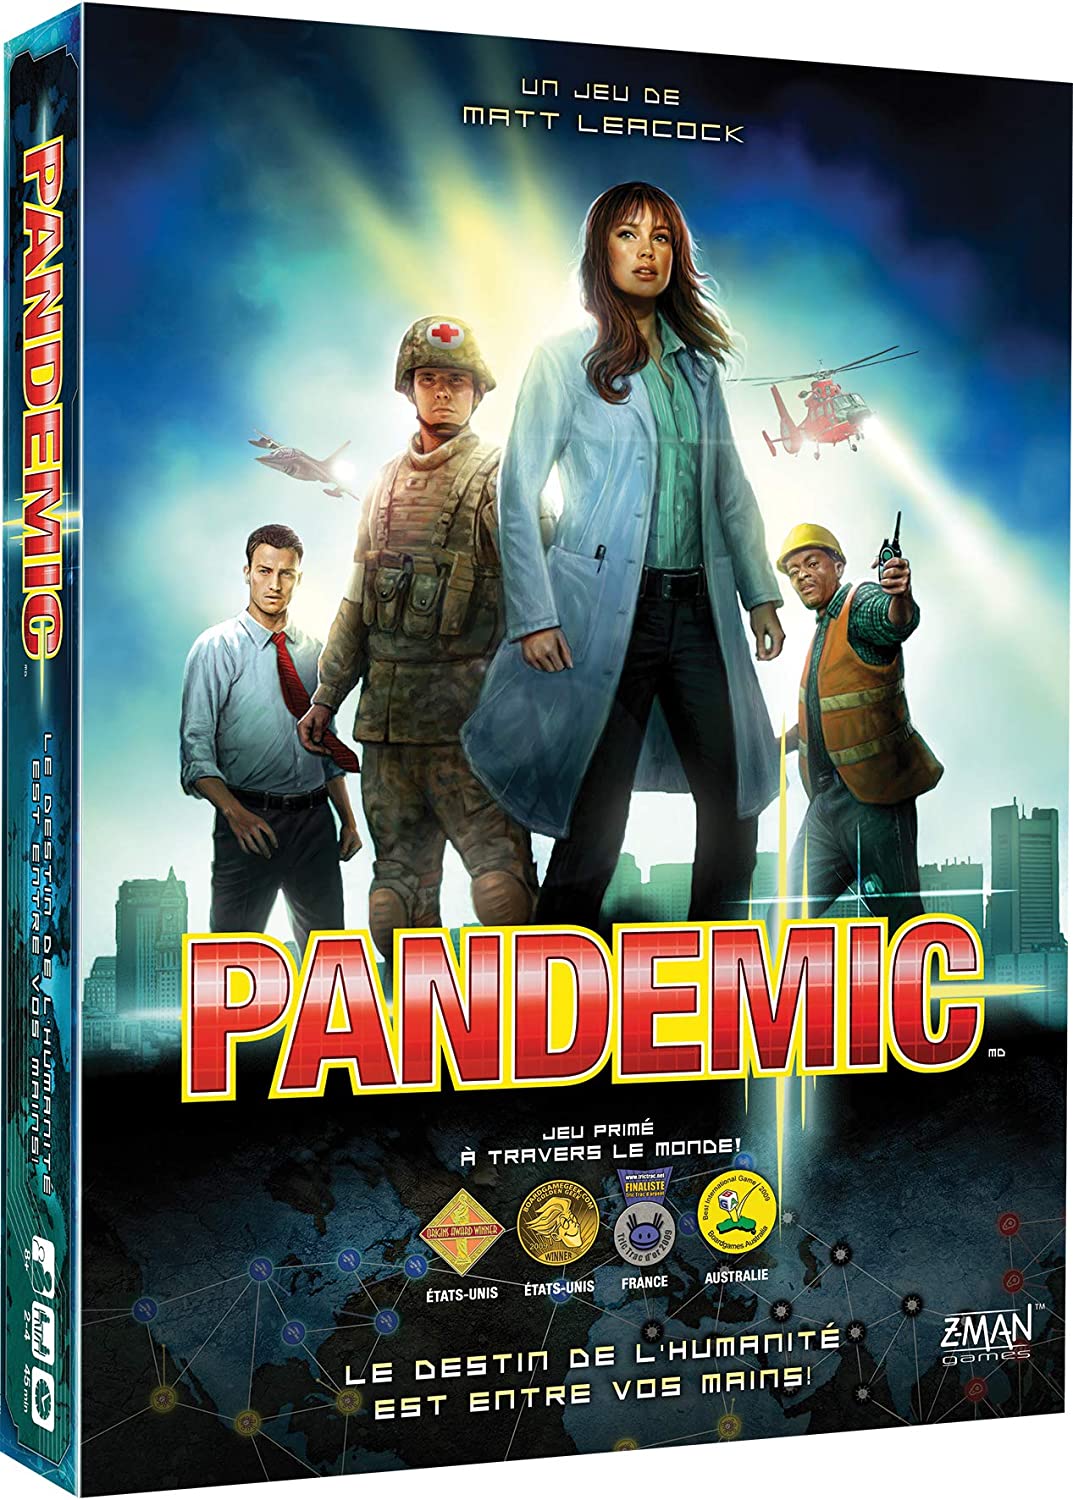 Pandemic (2013) - Loaded Dice